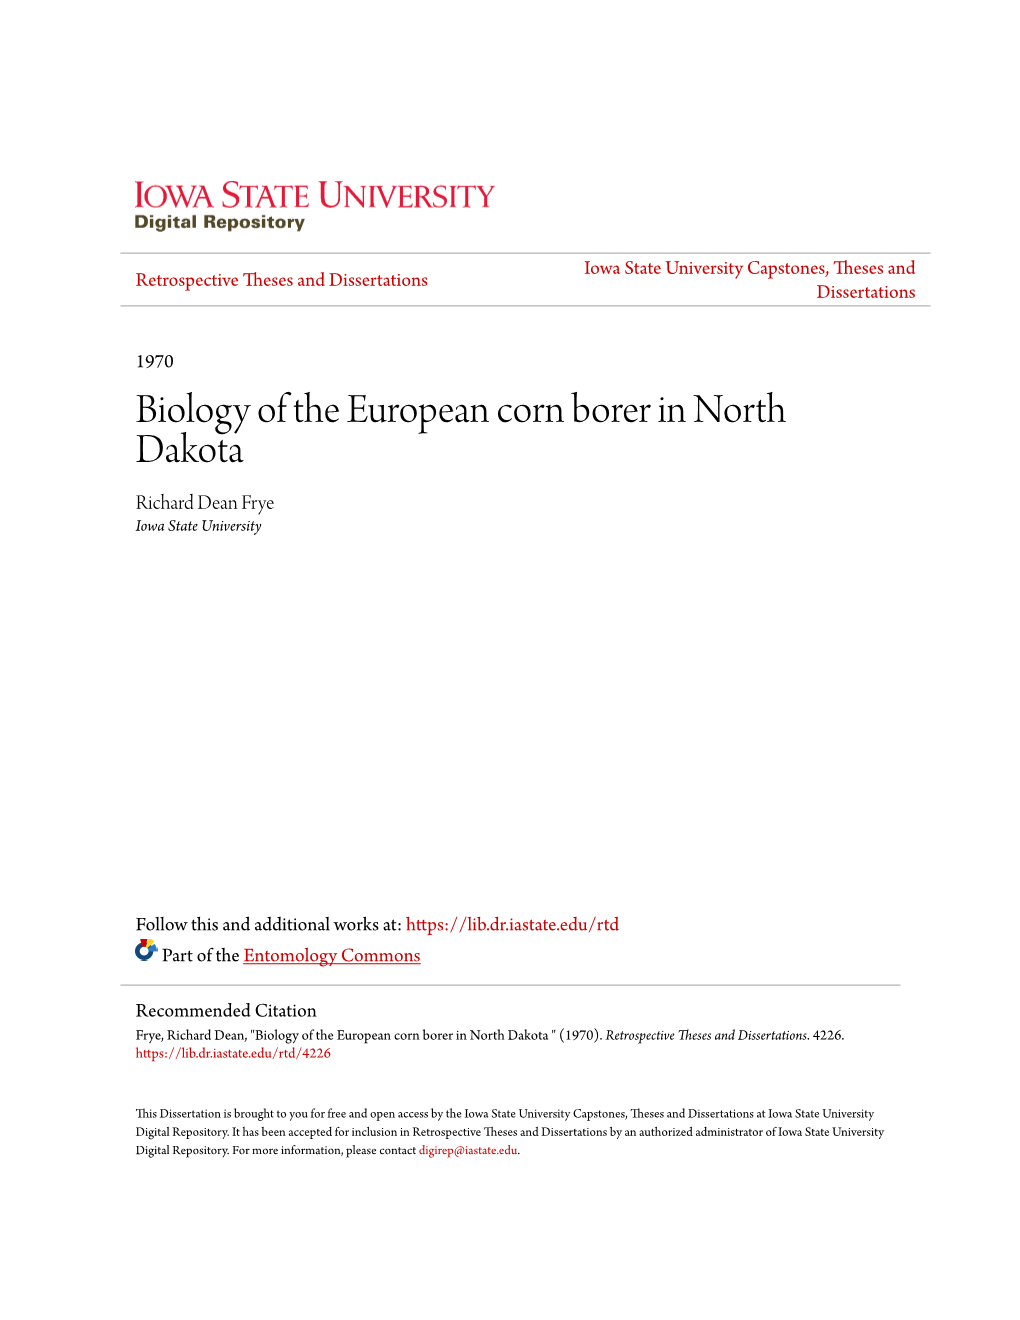 Biology of the European Corn Borer in North Dakota Richard Dean Frye Iowa State University